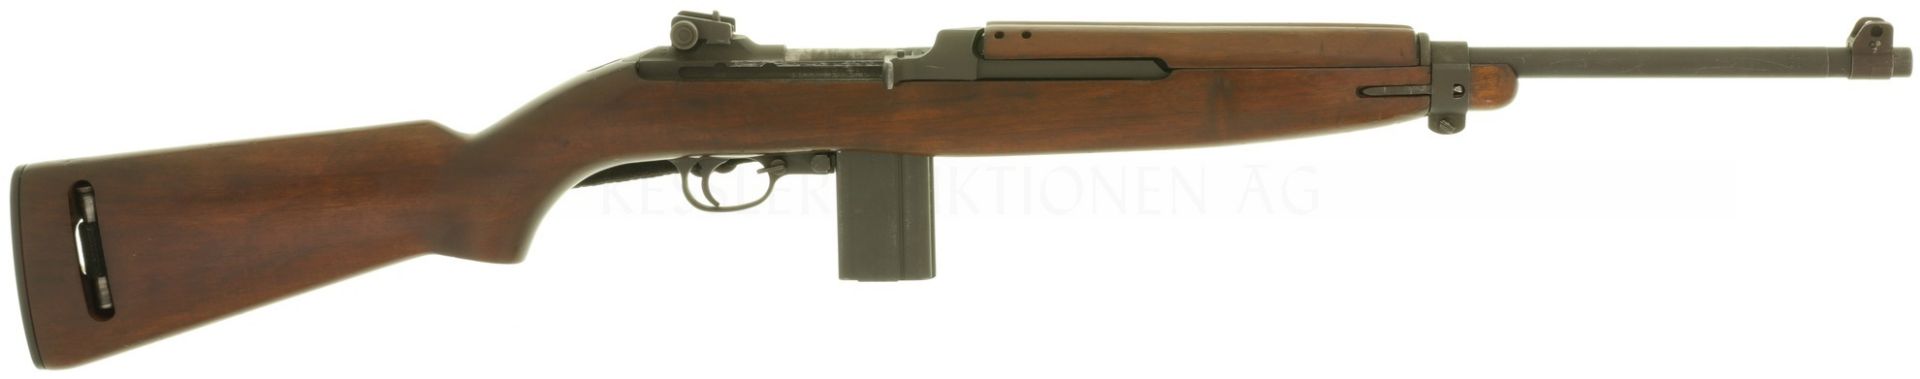 Selbstladebüchse, Inland Division, 30M1 Carbine, Kal. .30Carb